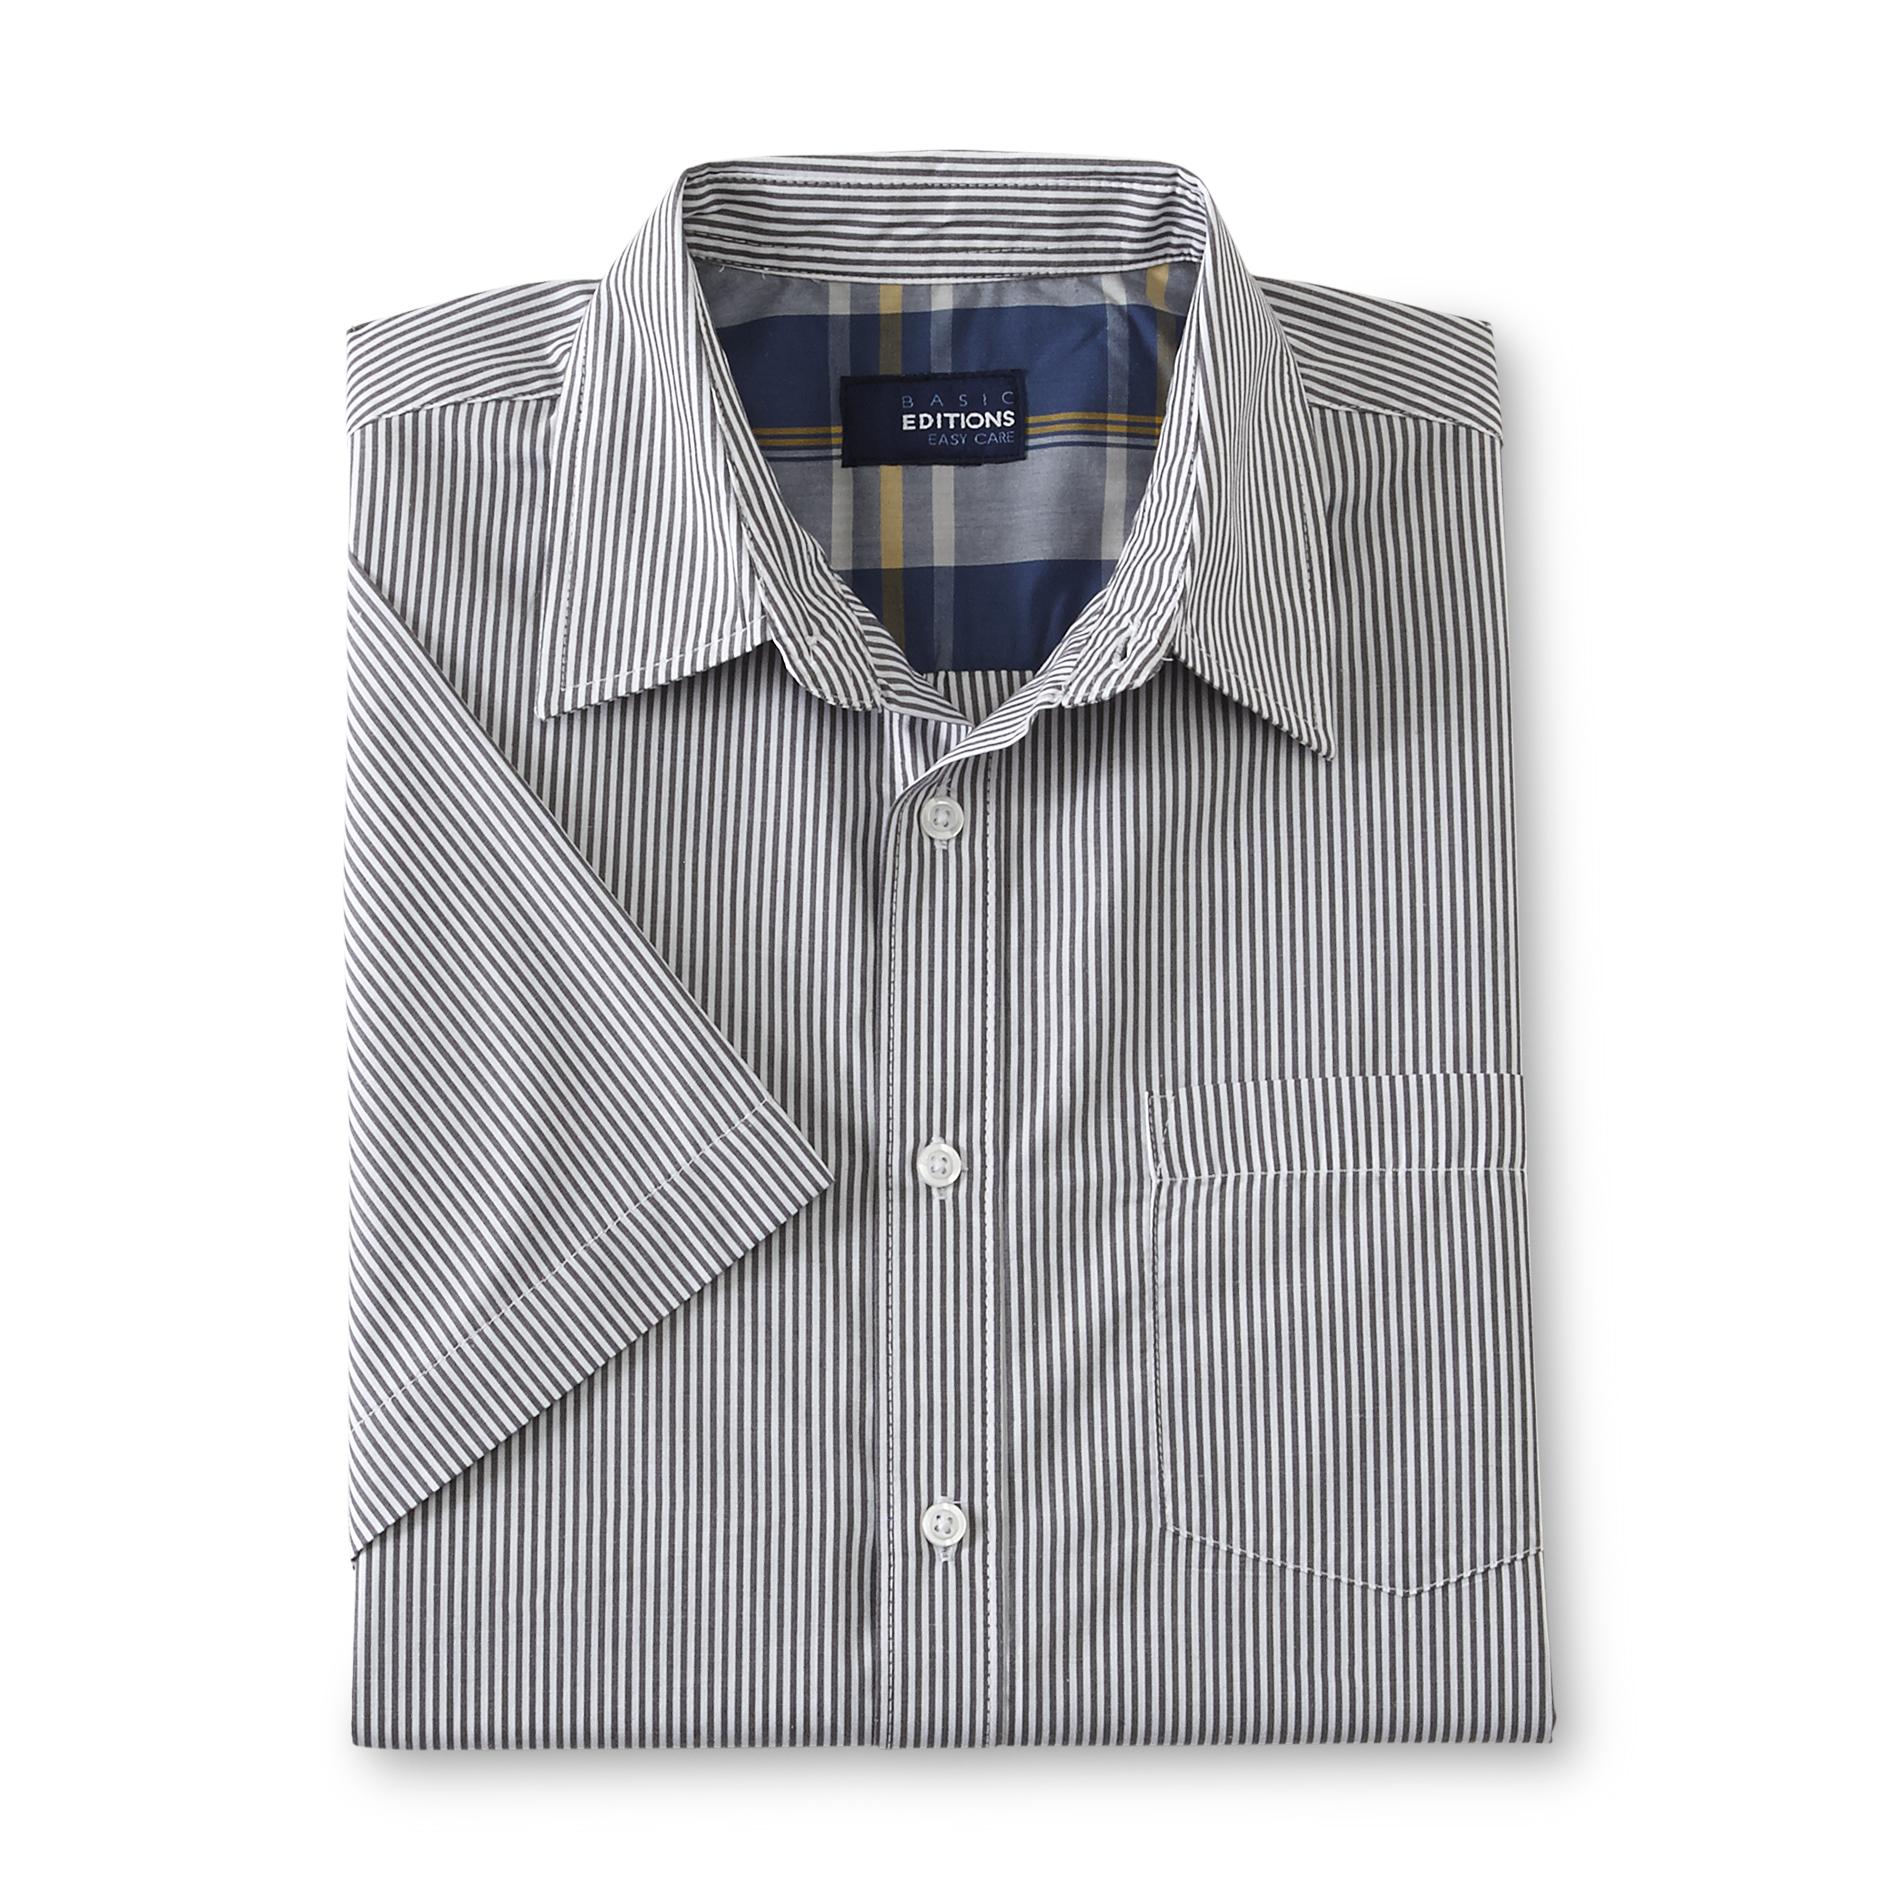 Basic Editions Men's Easy Care Short-Sleeve Shirt - Striped